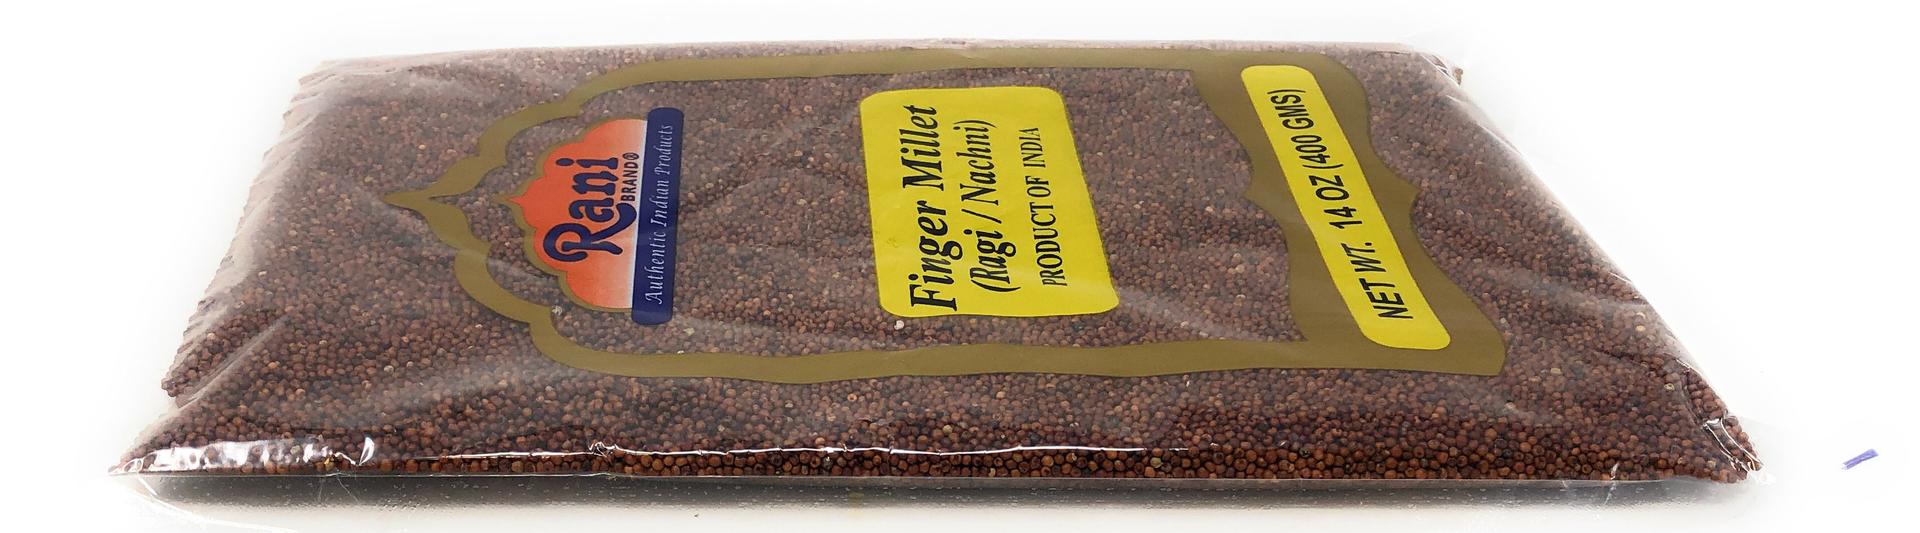 Rani Ragi Finger Millet (Eleusine Coracana) Whole Ancient Grain Seeds 400g (14oz) ~ All Natural | Gluten Friendly | NON-GMO | Vegan | Indian Origin